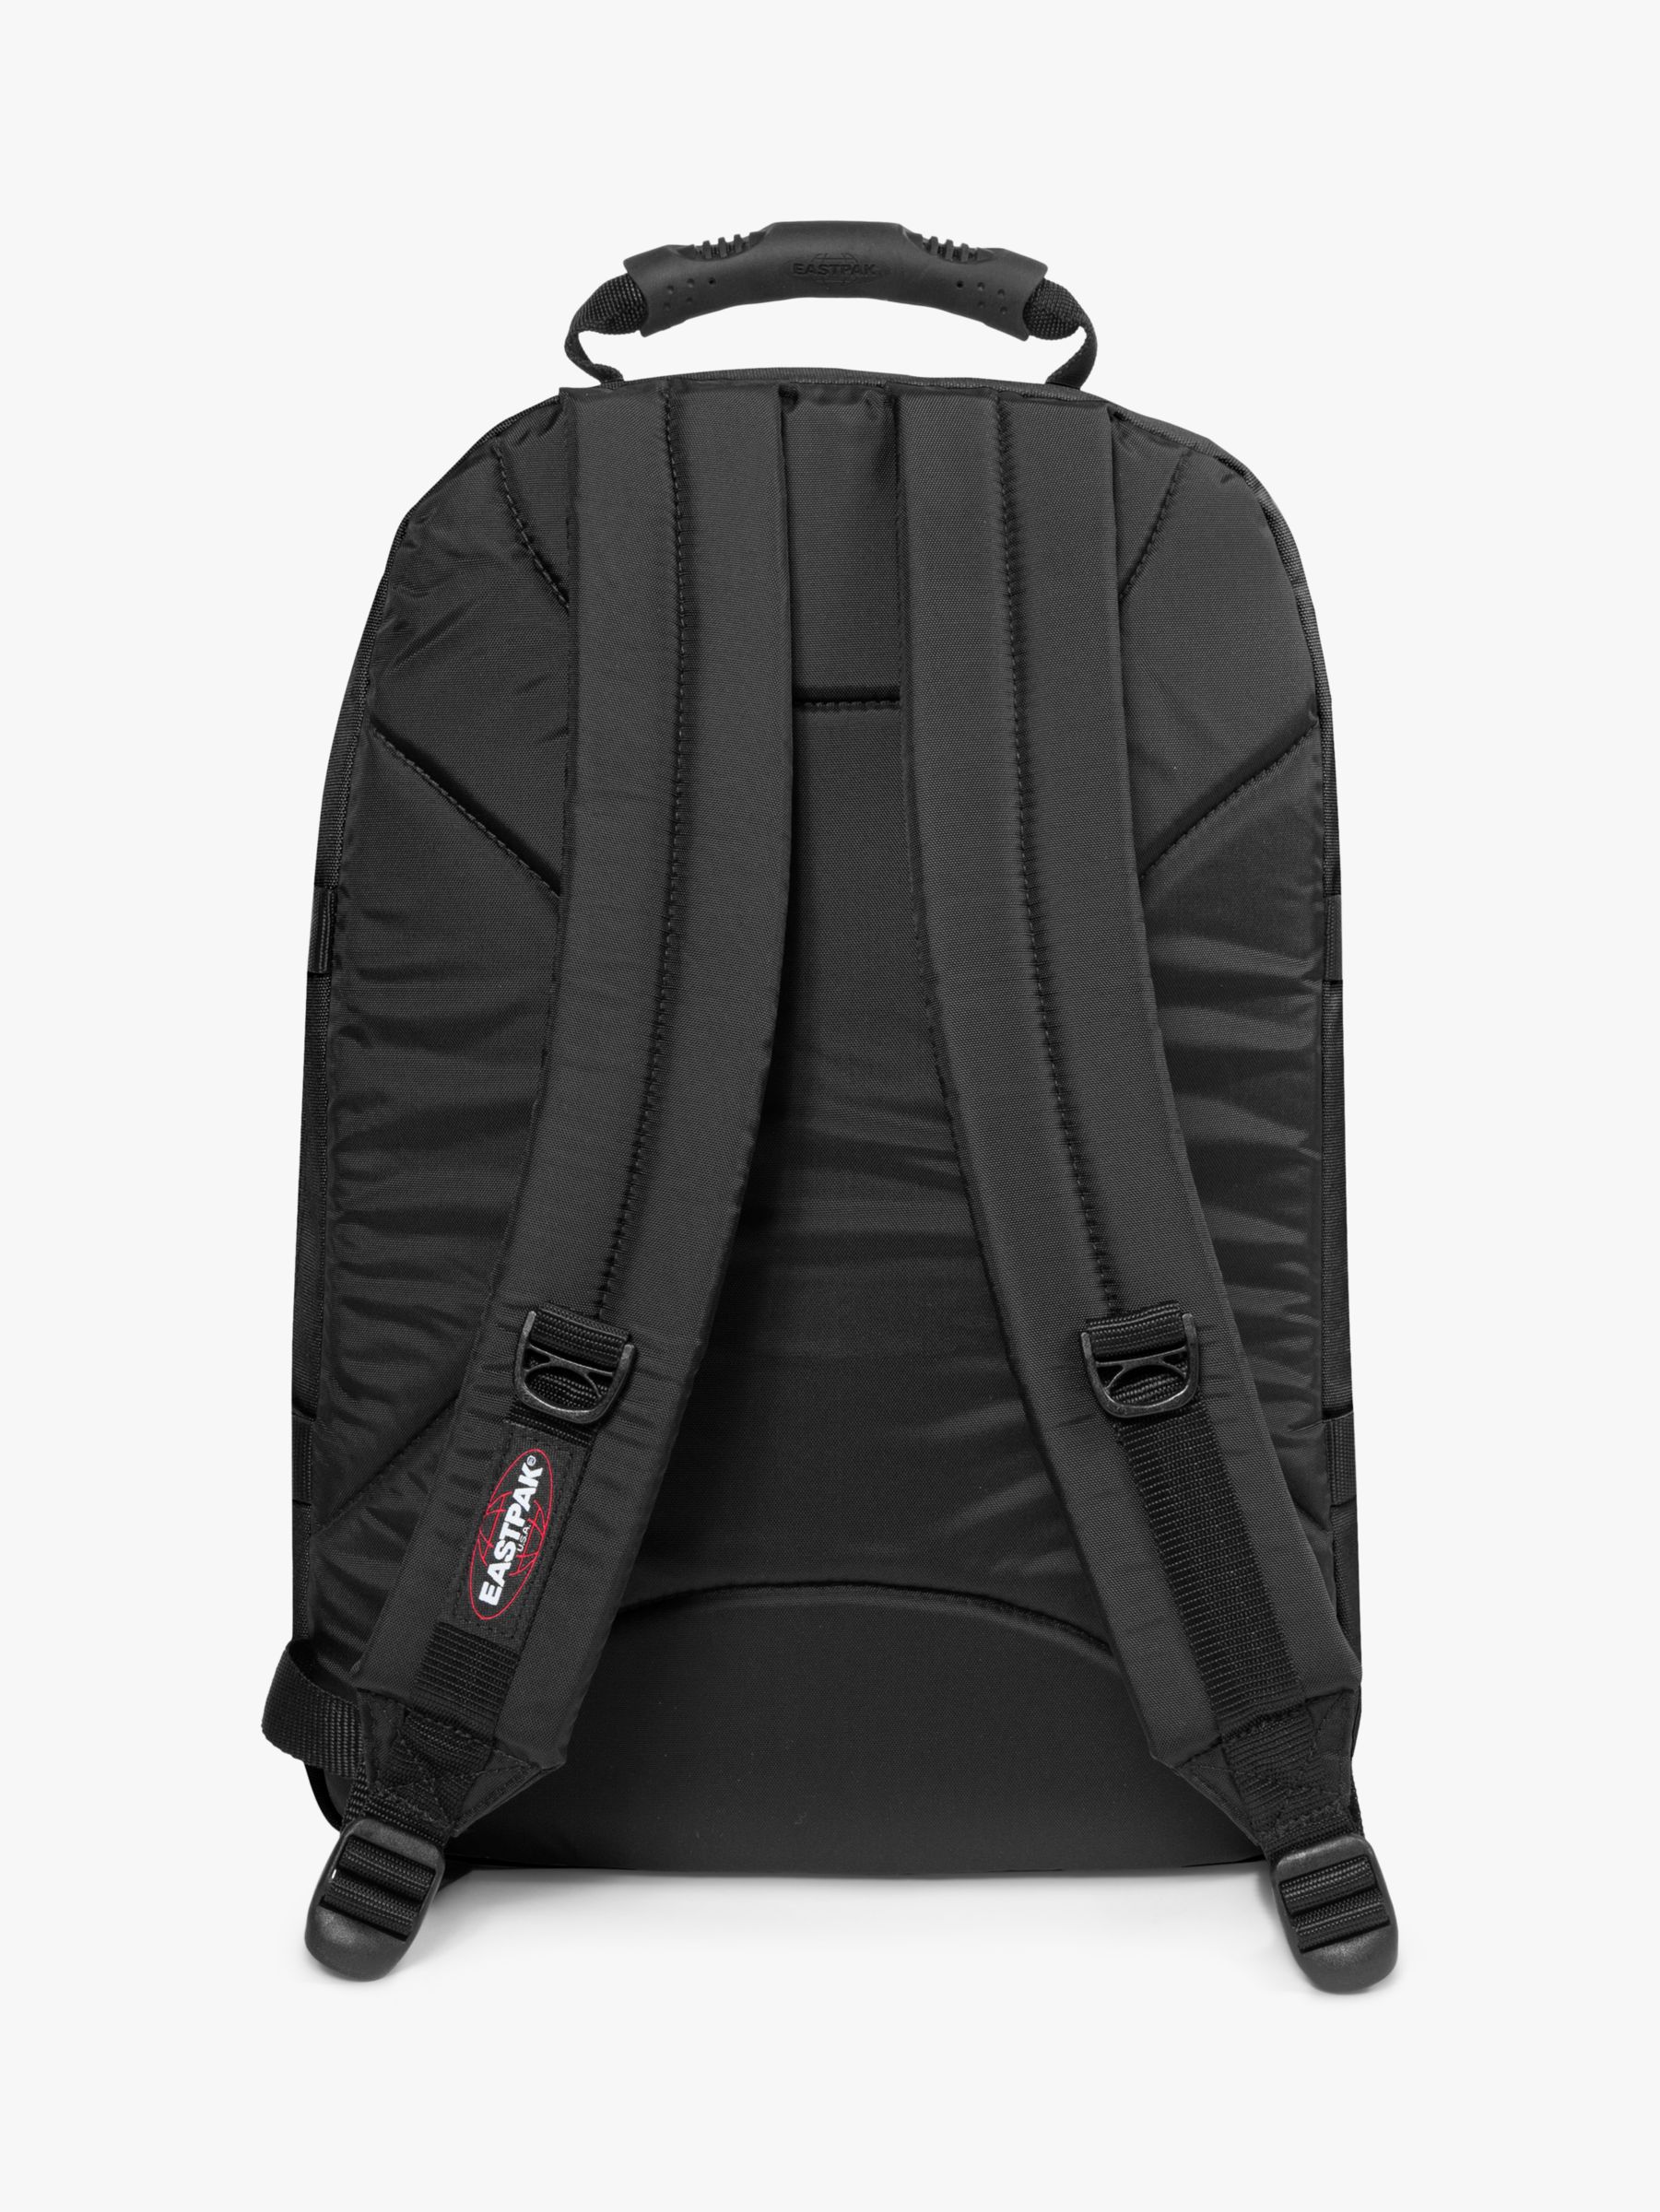 eastpak backpack Bag Mens Brand New